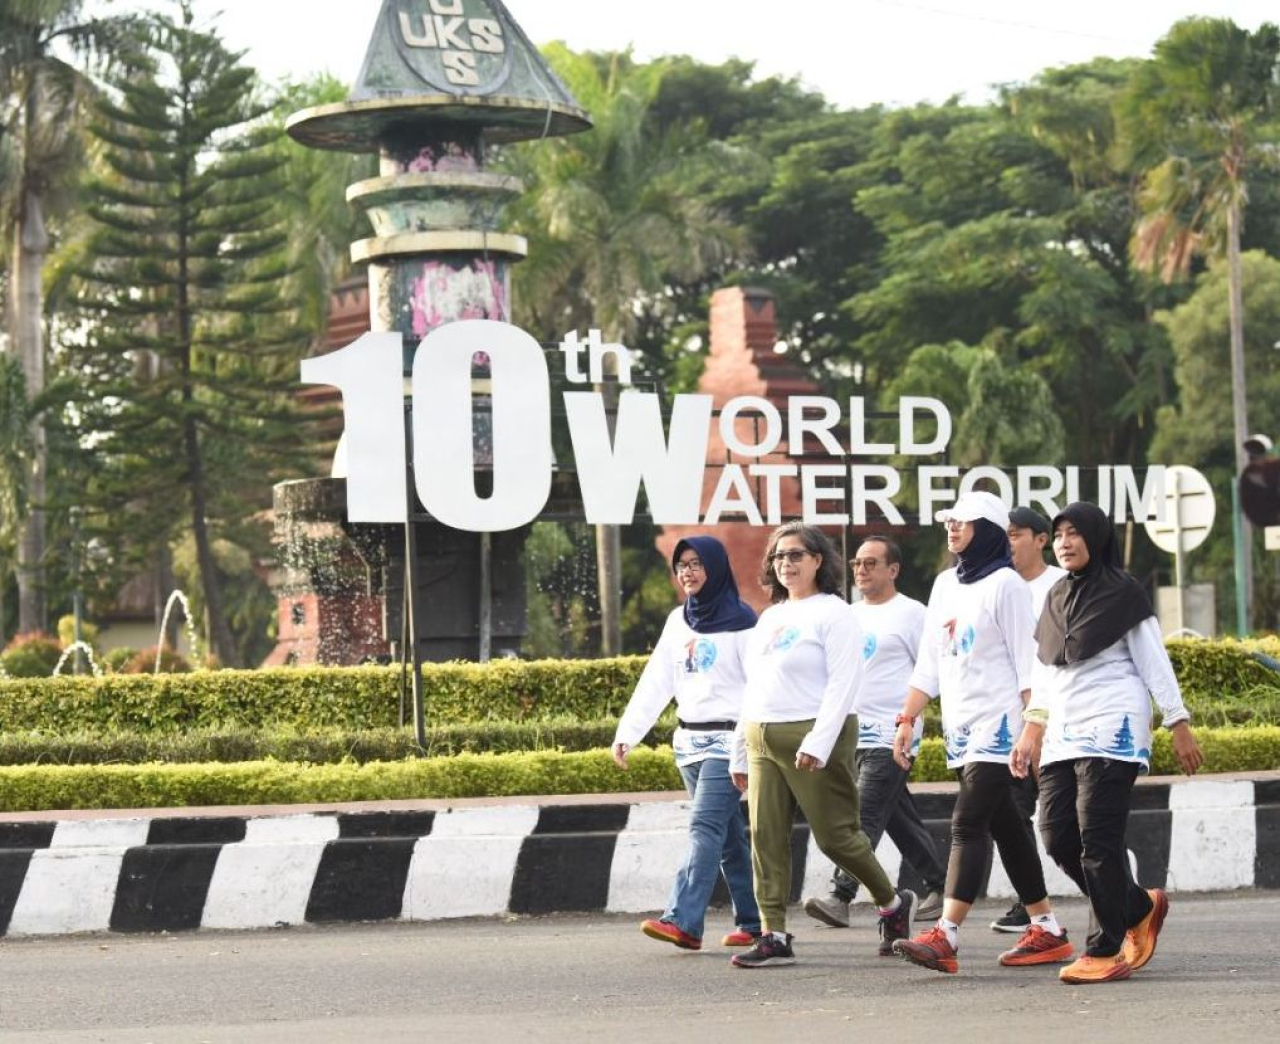 PJ Wali Kota Kediri Bersama Masyarakat Ikuti Kediri's Fun Run for 10th World Water Forum